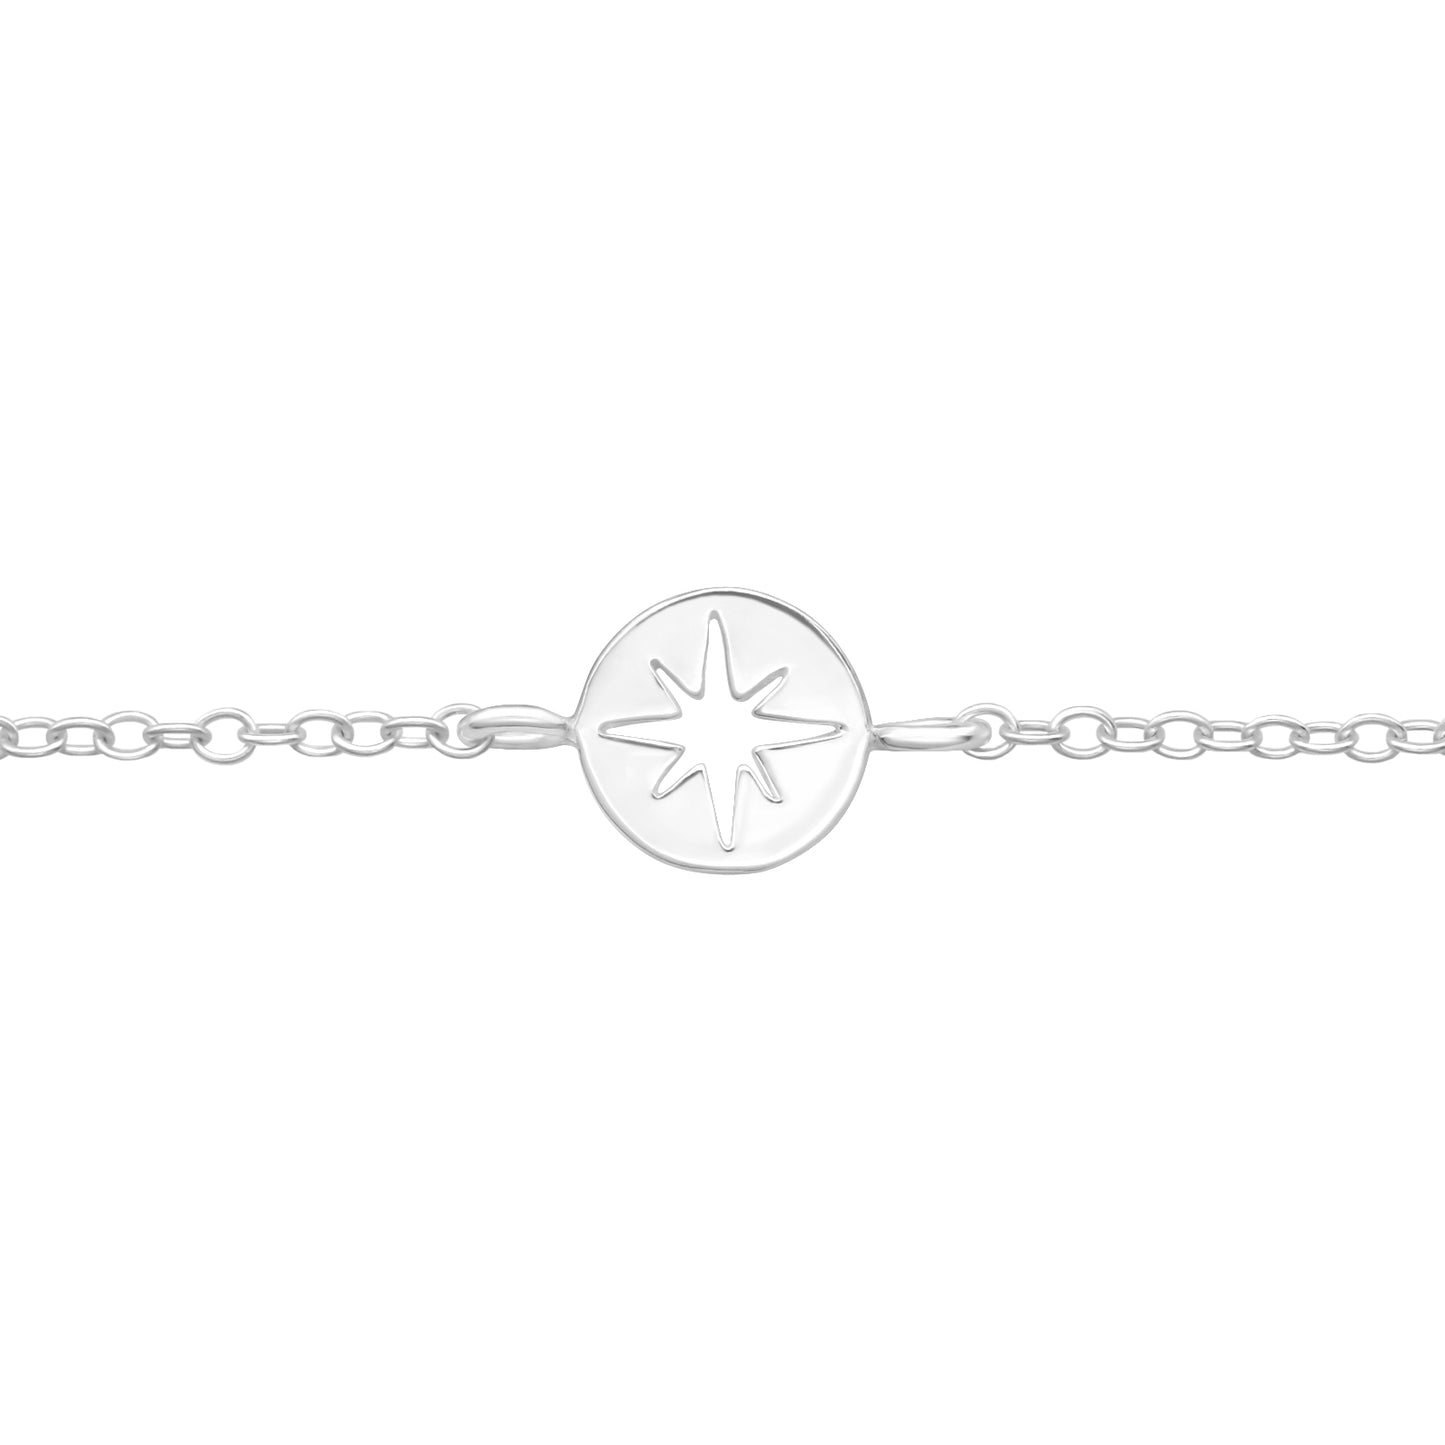 North Star Chain Bracelet